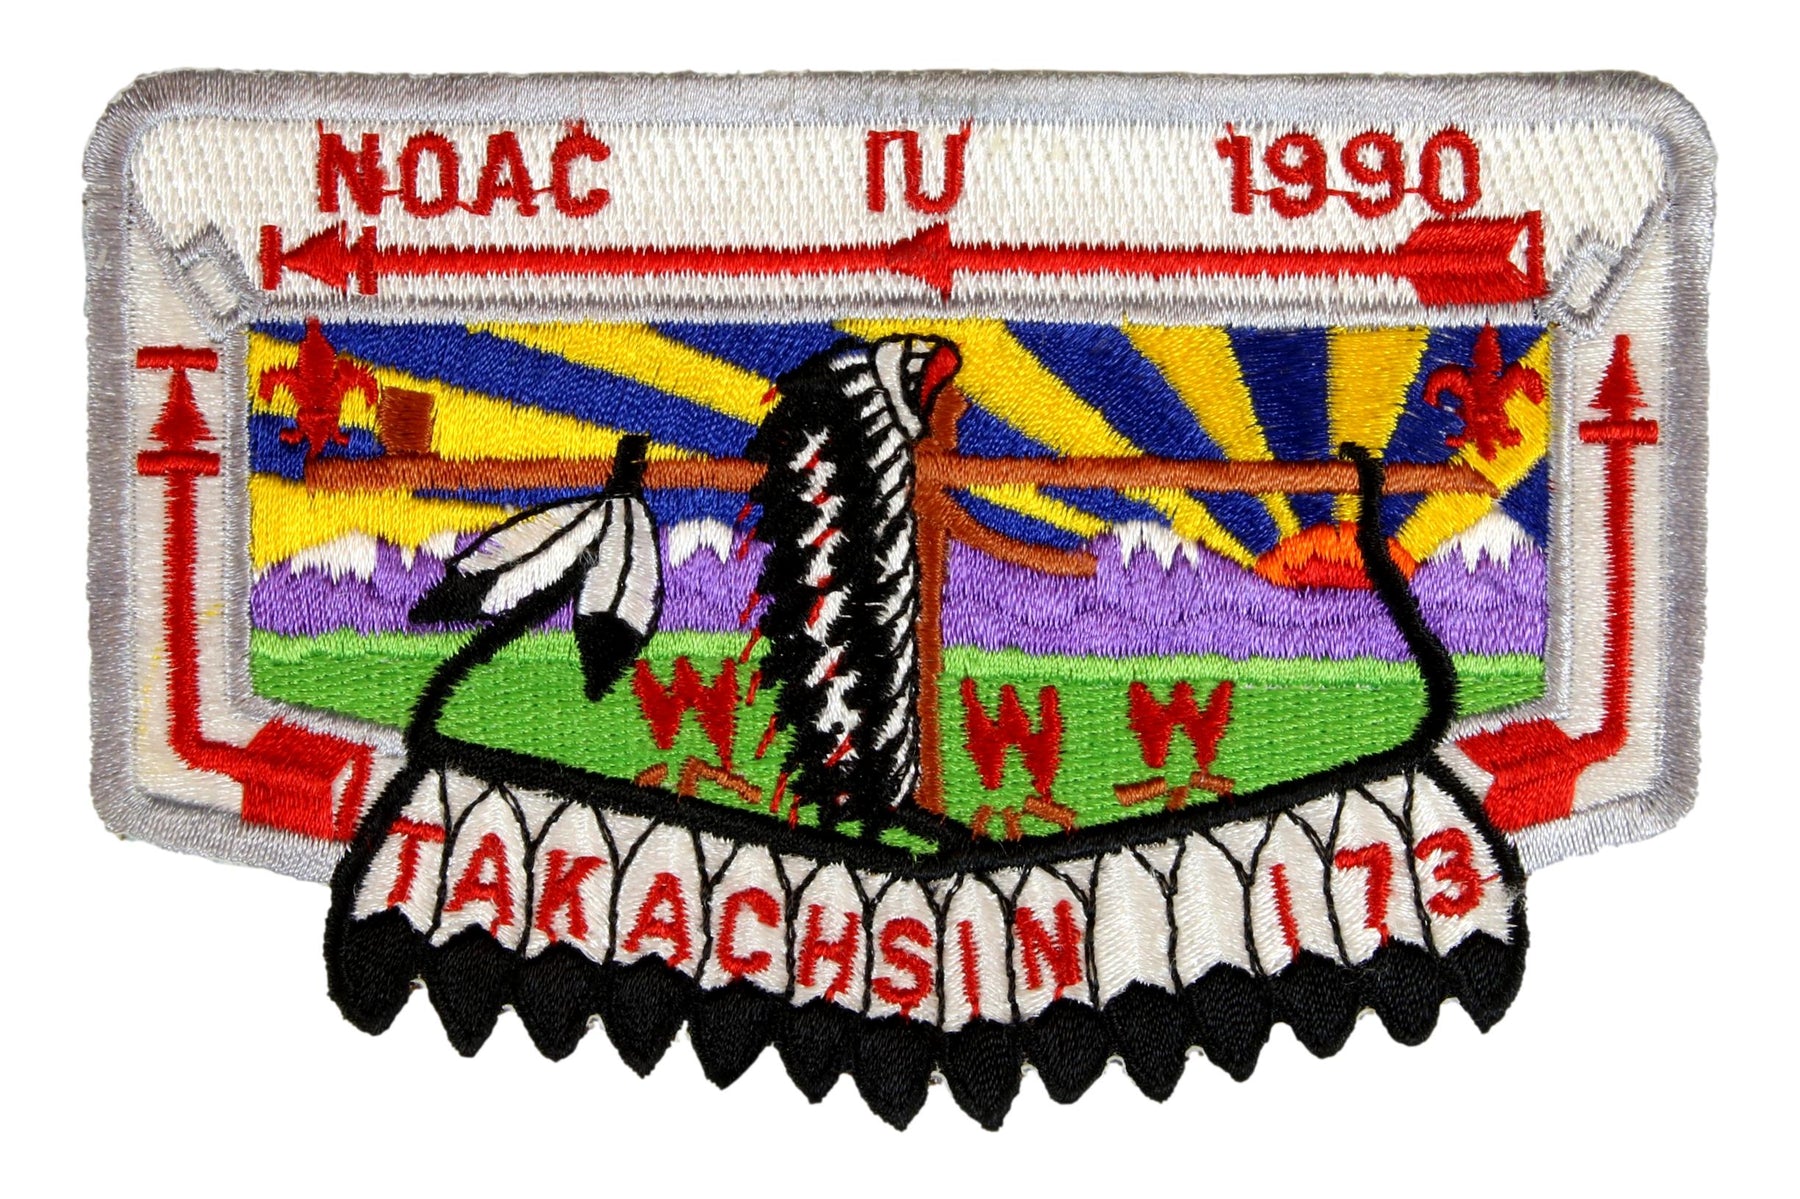 Lodge 173 Takachsin Flap S-? 1990 NOAC